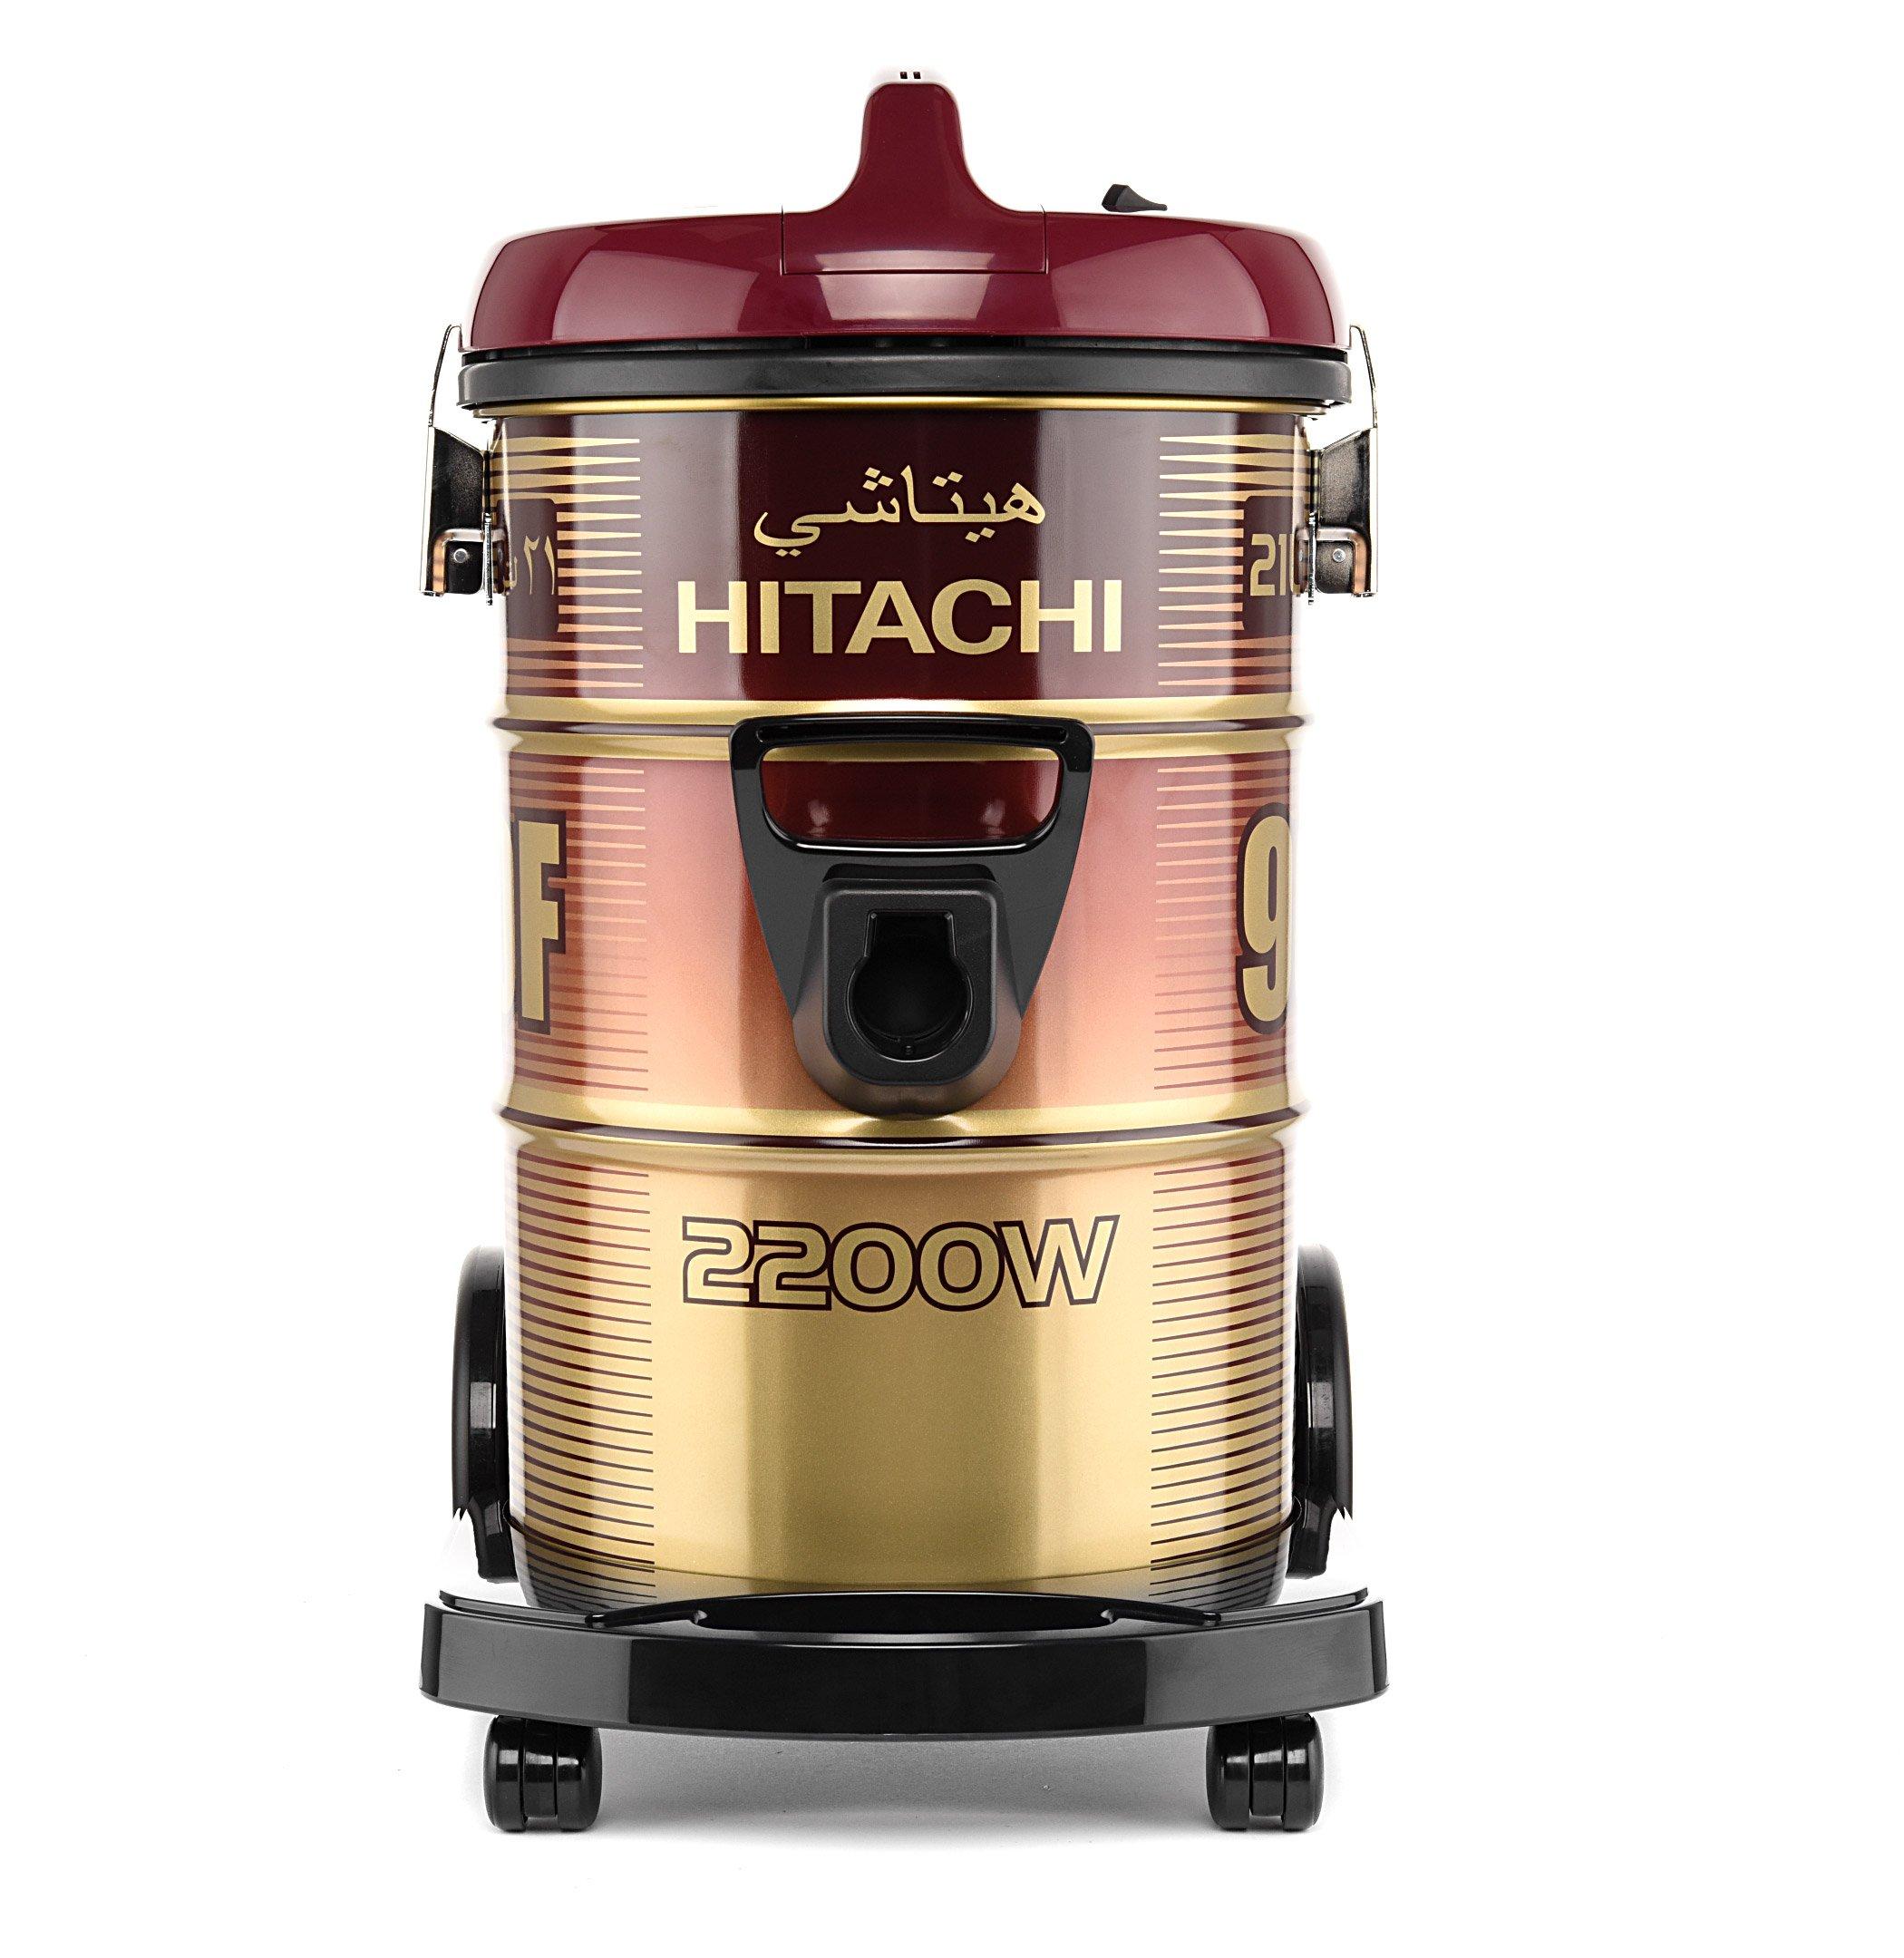 Buy Hitachi Vacuum Cleaner, Drum Type, 21L, 2200W, Wine Red. in Saudi Arabia